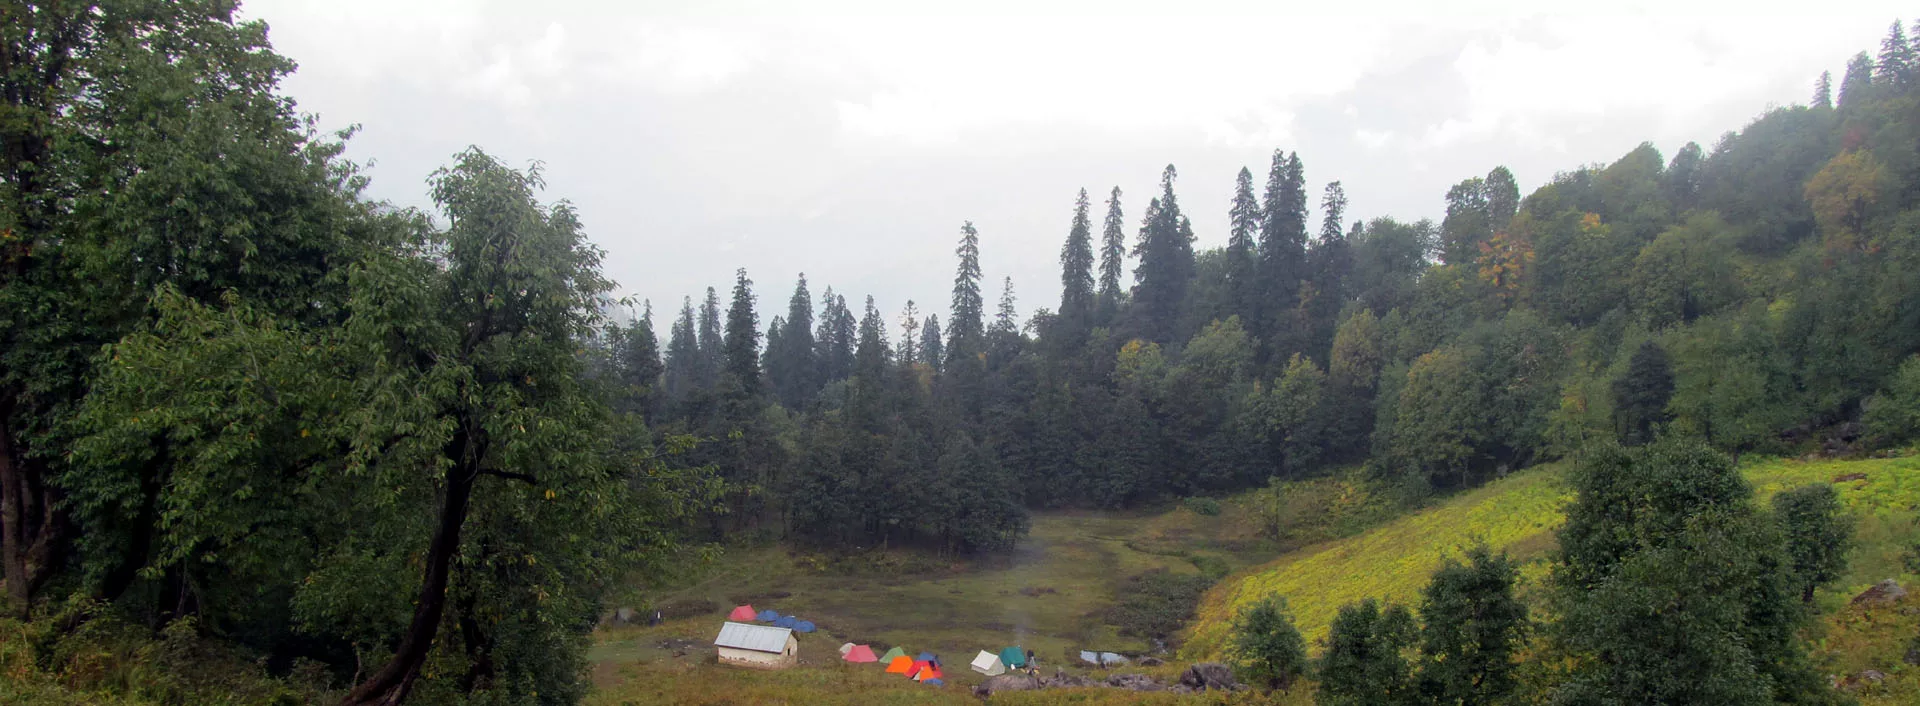 Lamadugh camp during the spring season